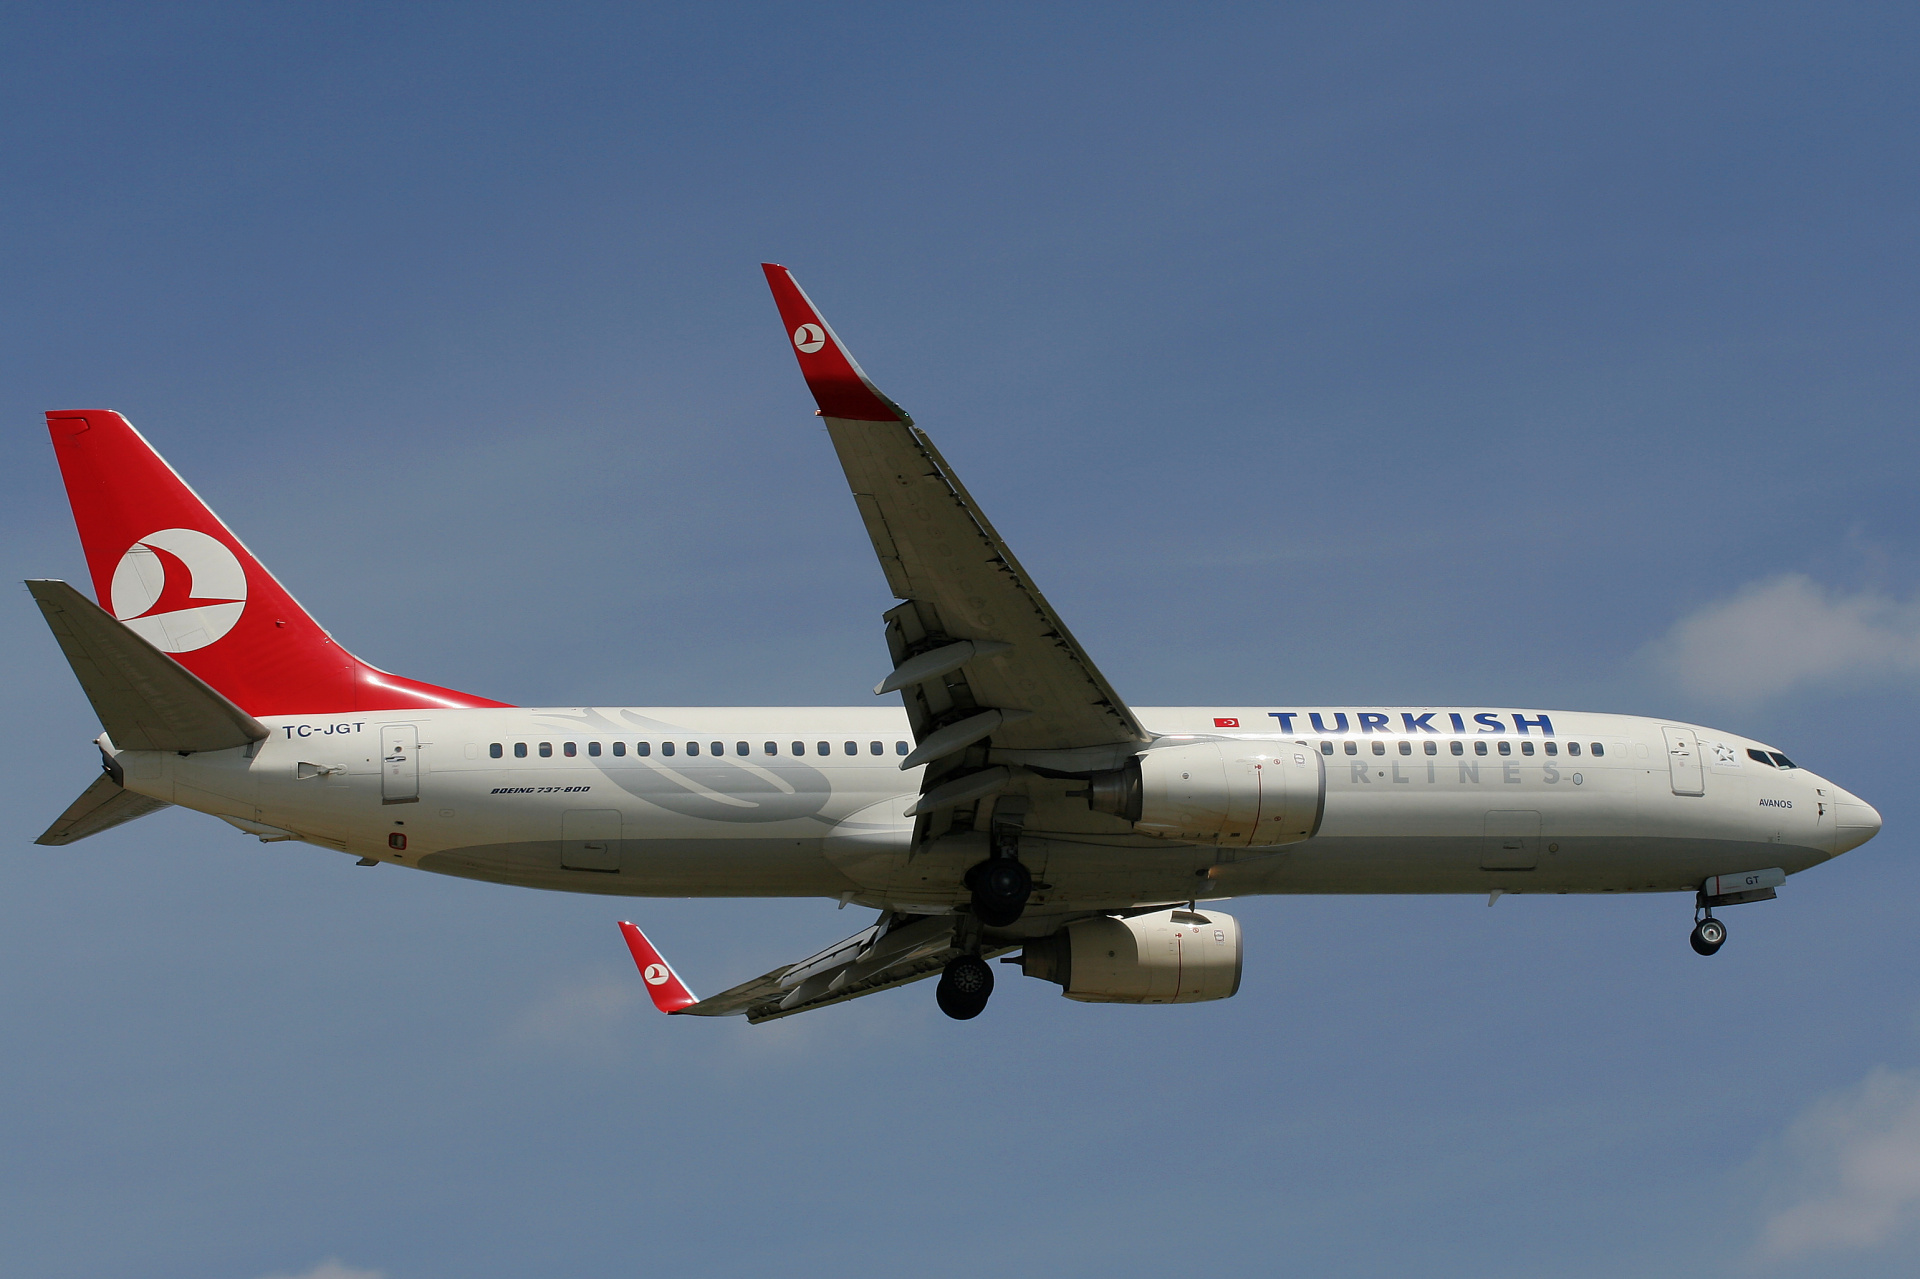 TC-JGT (Aircraft » EPWA Spotting » Boeing 737-800 » THY Turkish Airlines)